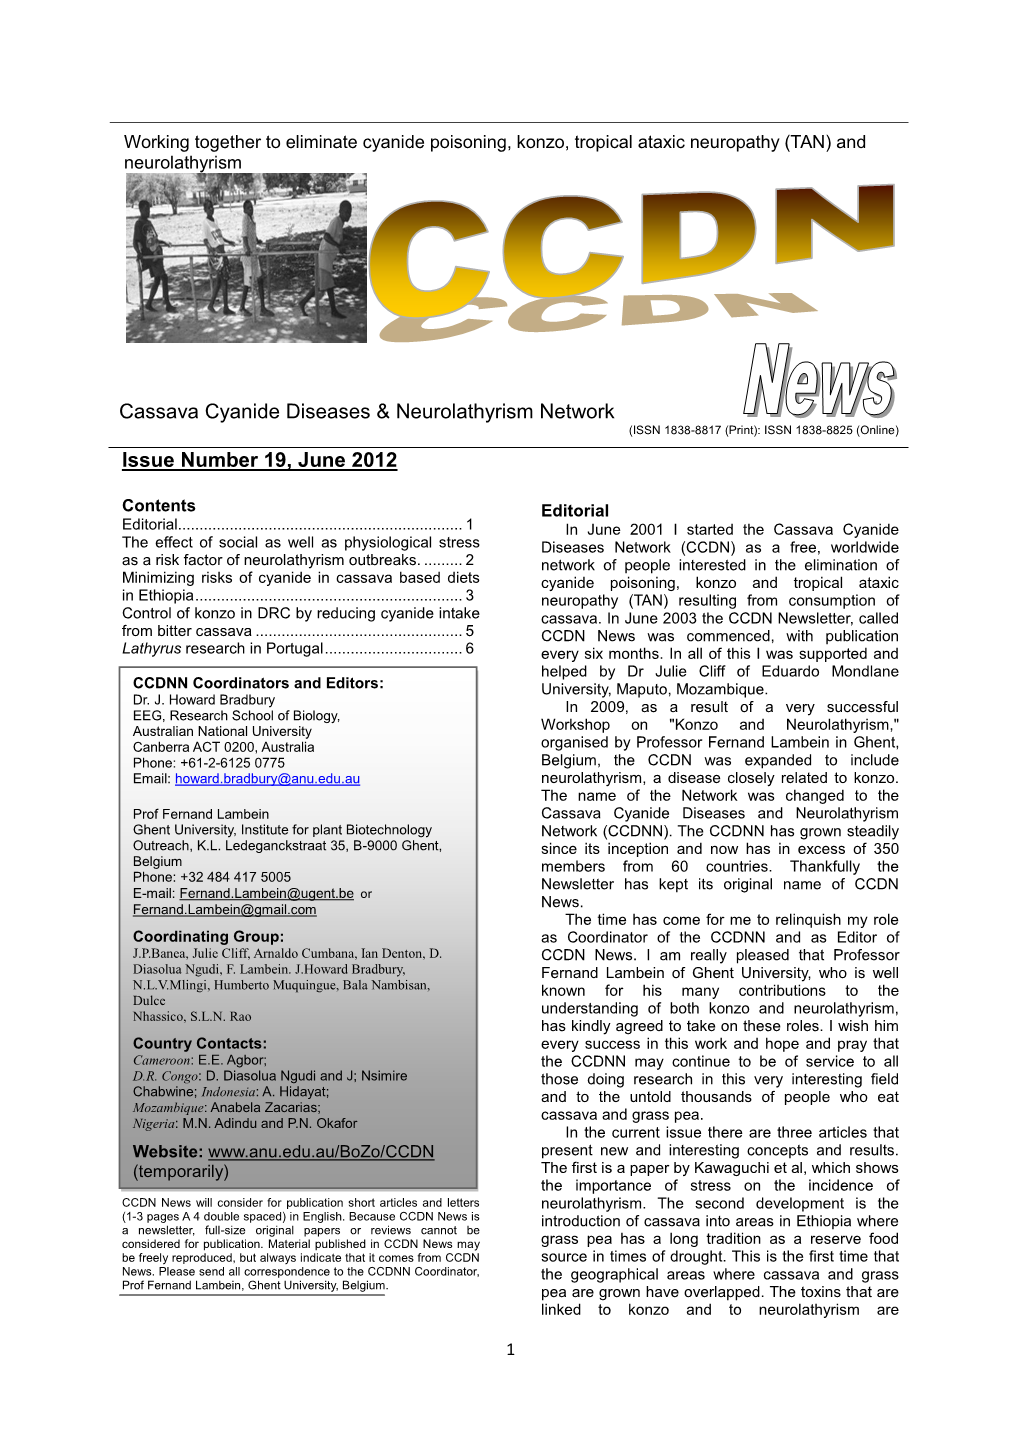 Cassava Cyanide Diseases & Neurolathyrism Network